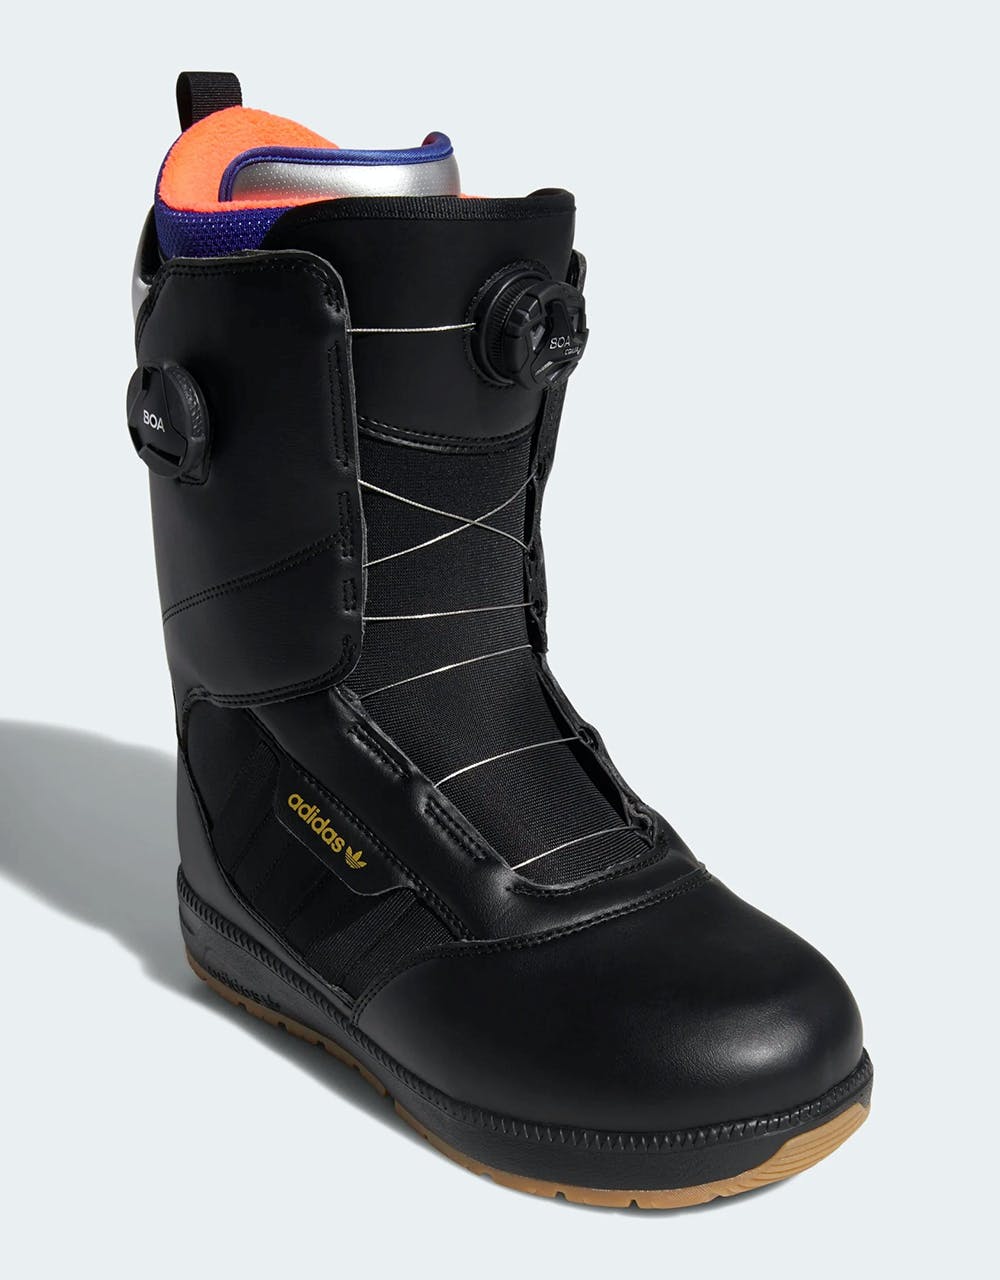 Adidas Response 3MC ADV 2020 Snowboard Boots - Core Black/White/Gold